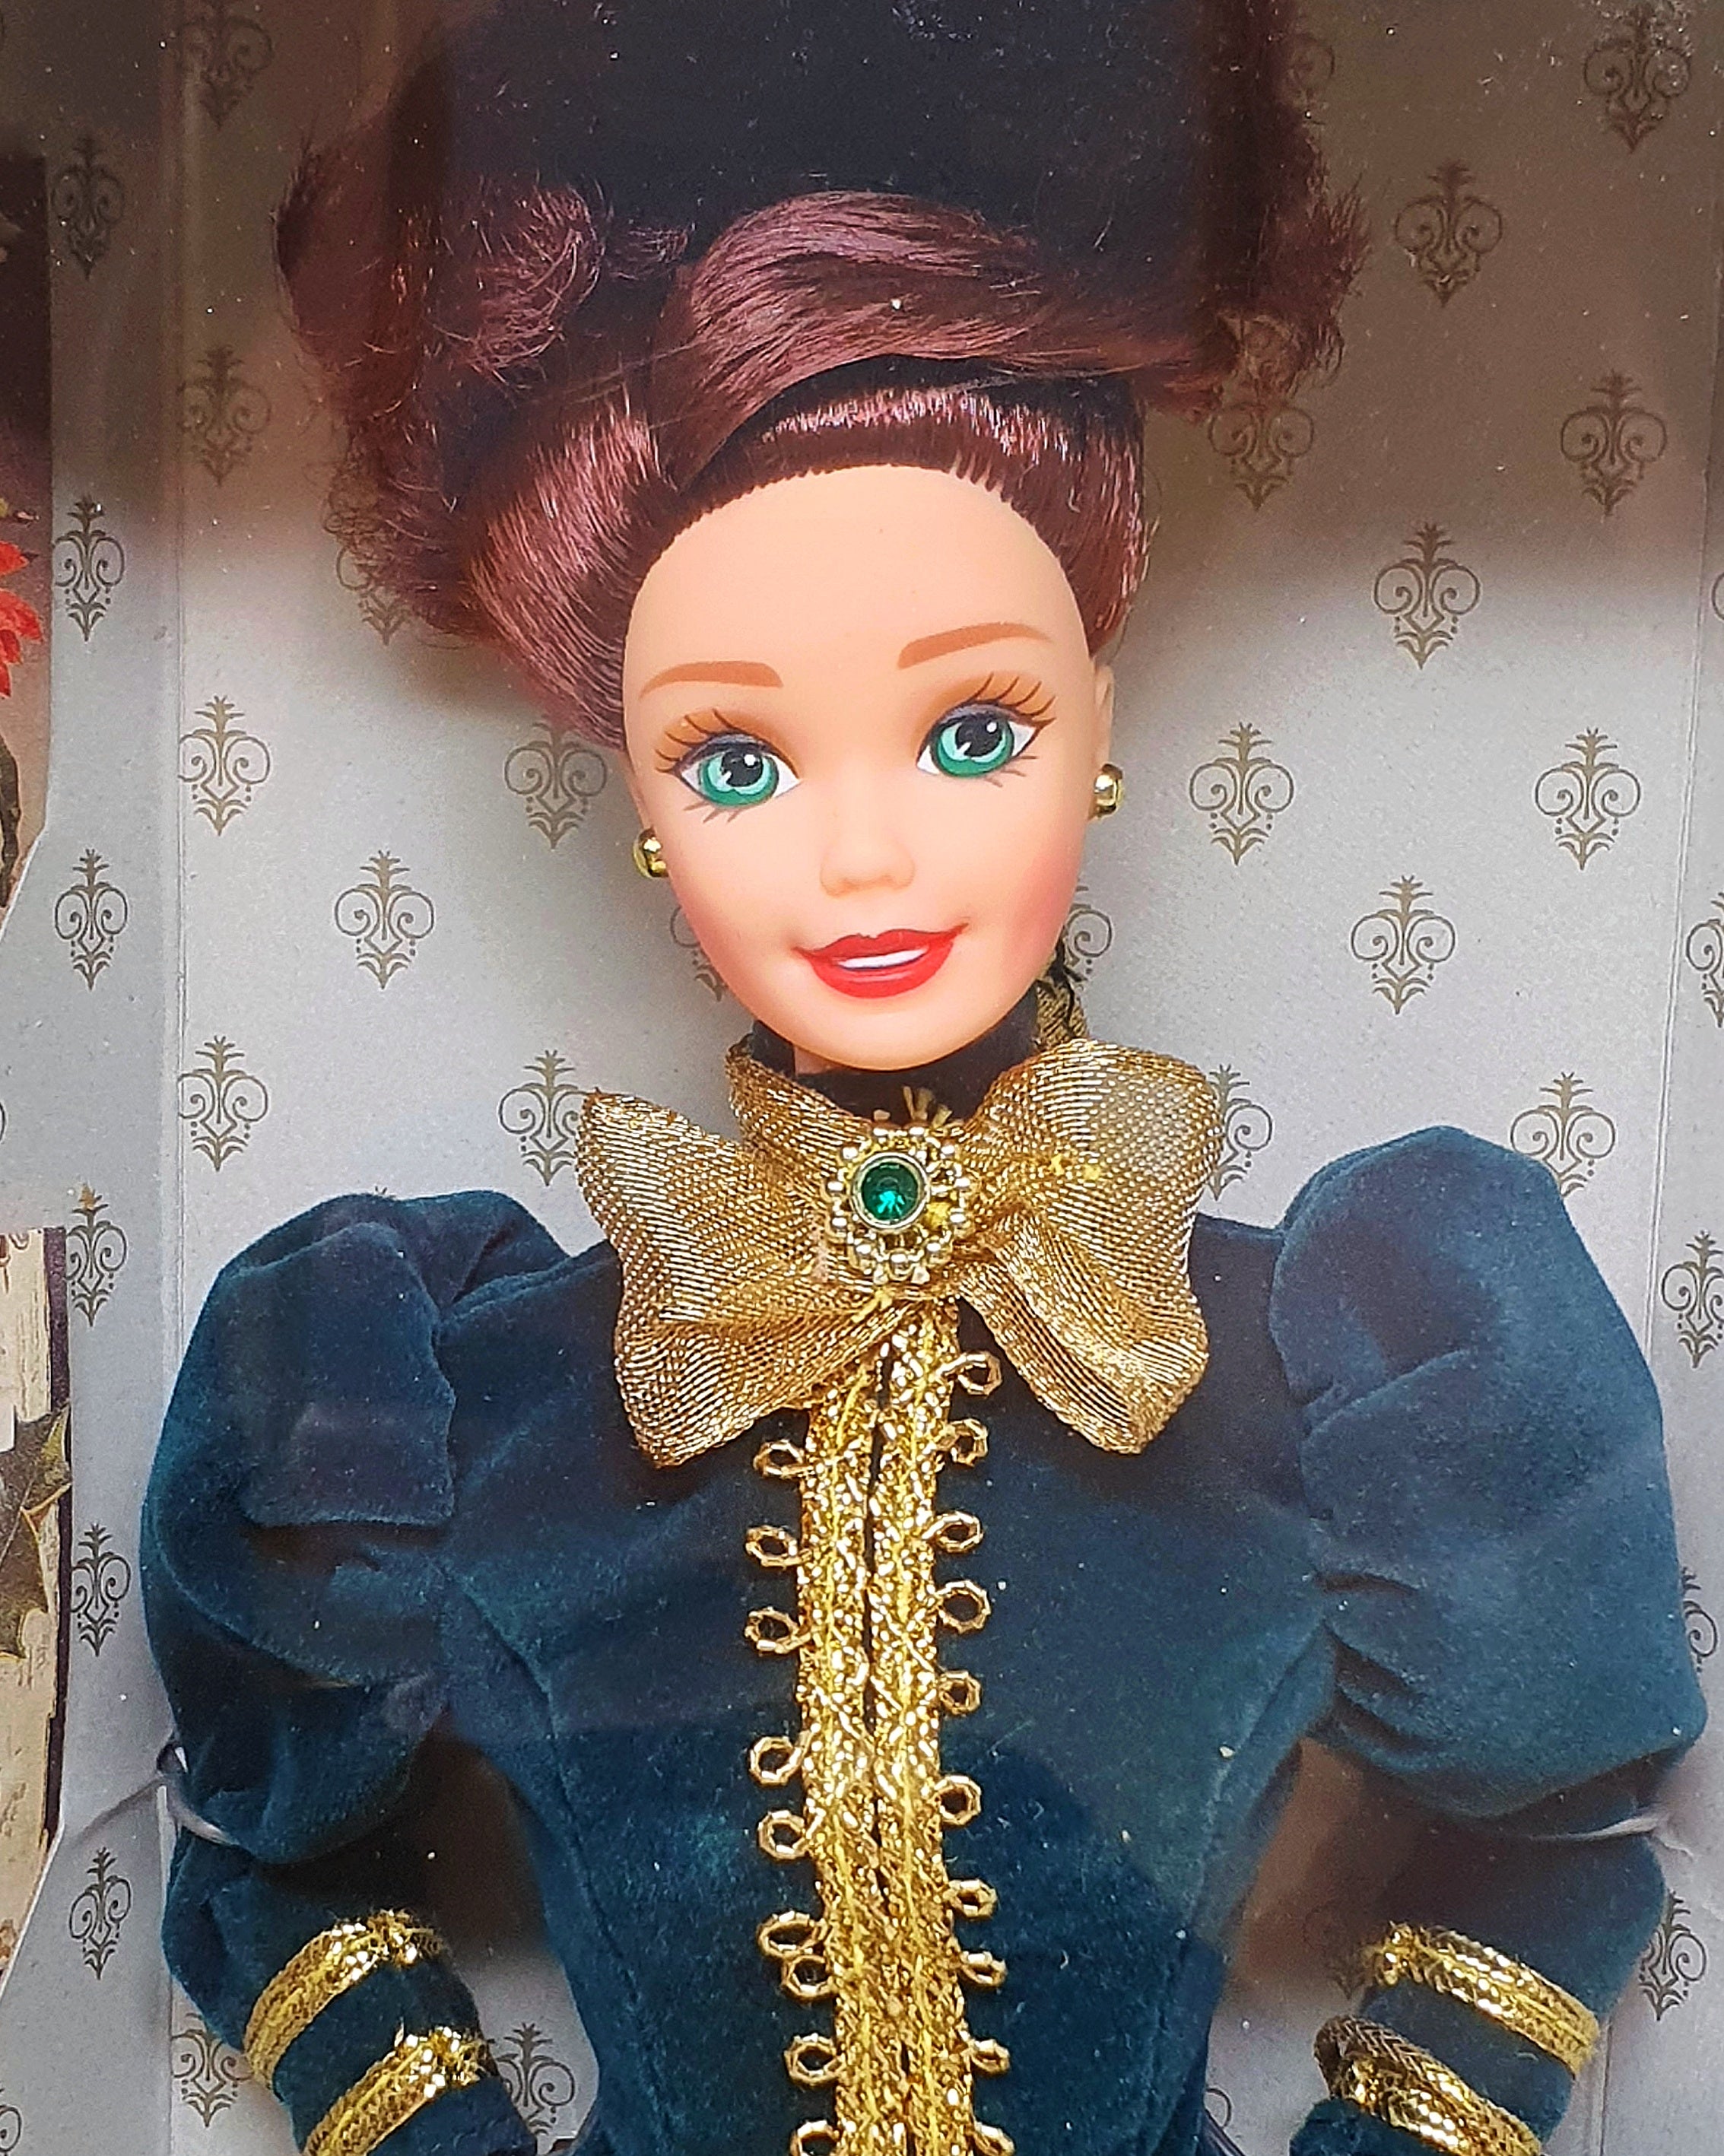 Hallmark Yuletide Romance Barbie, Mattel 1996 (NRFB).